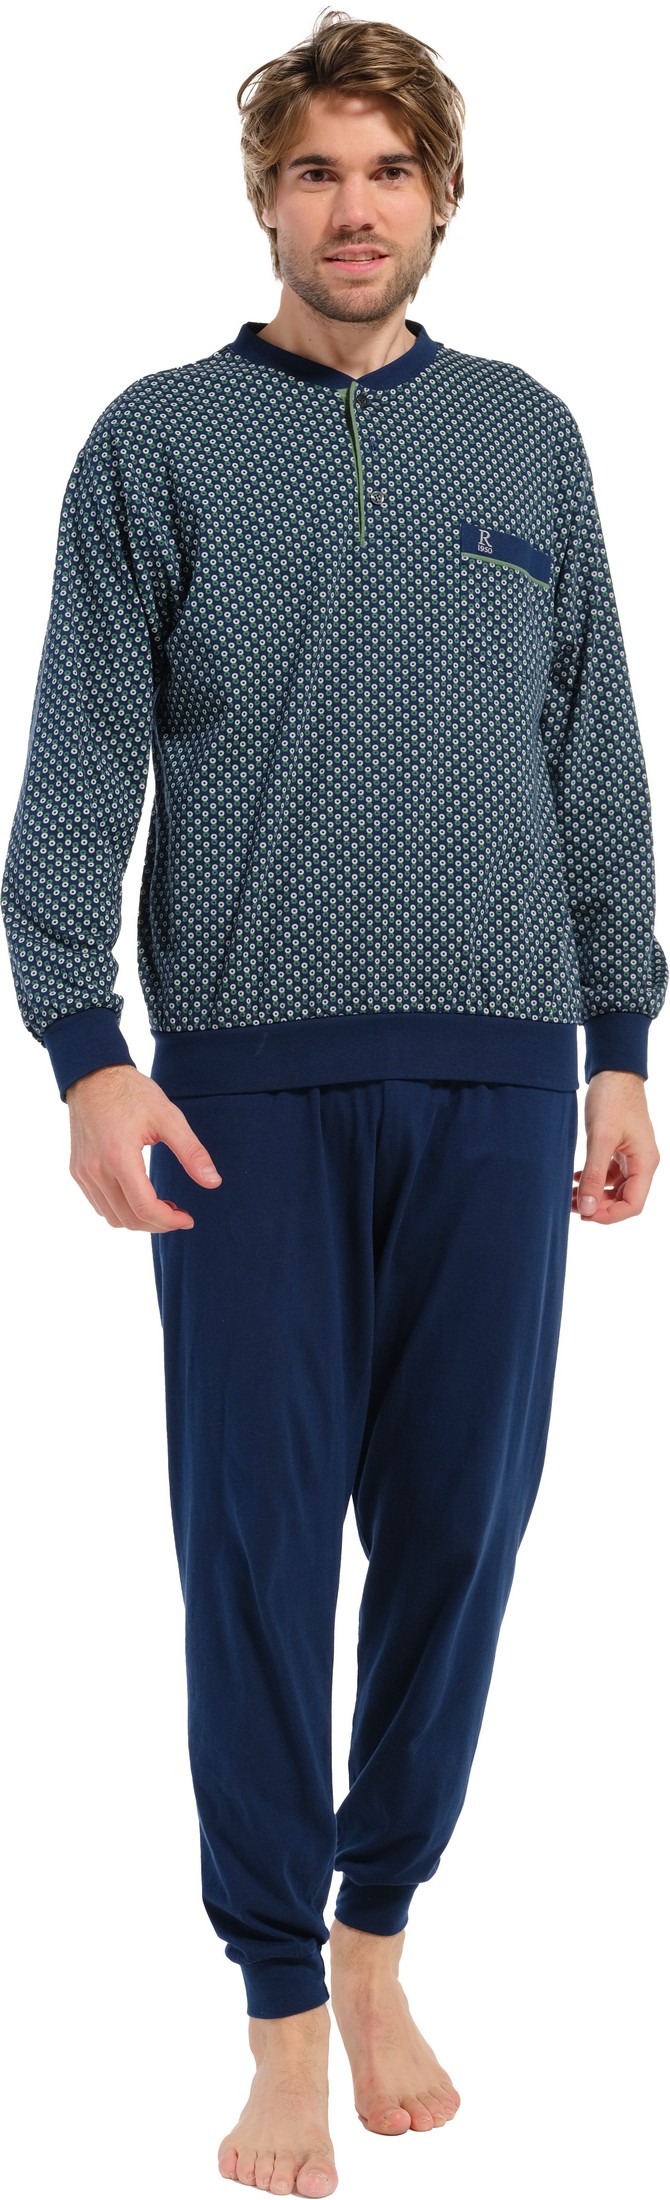 Robson heren pyjama 27232-718-4 - Blauw - XL/54